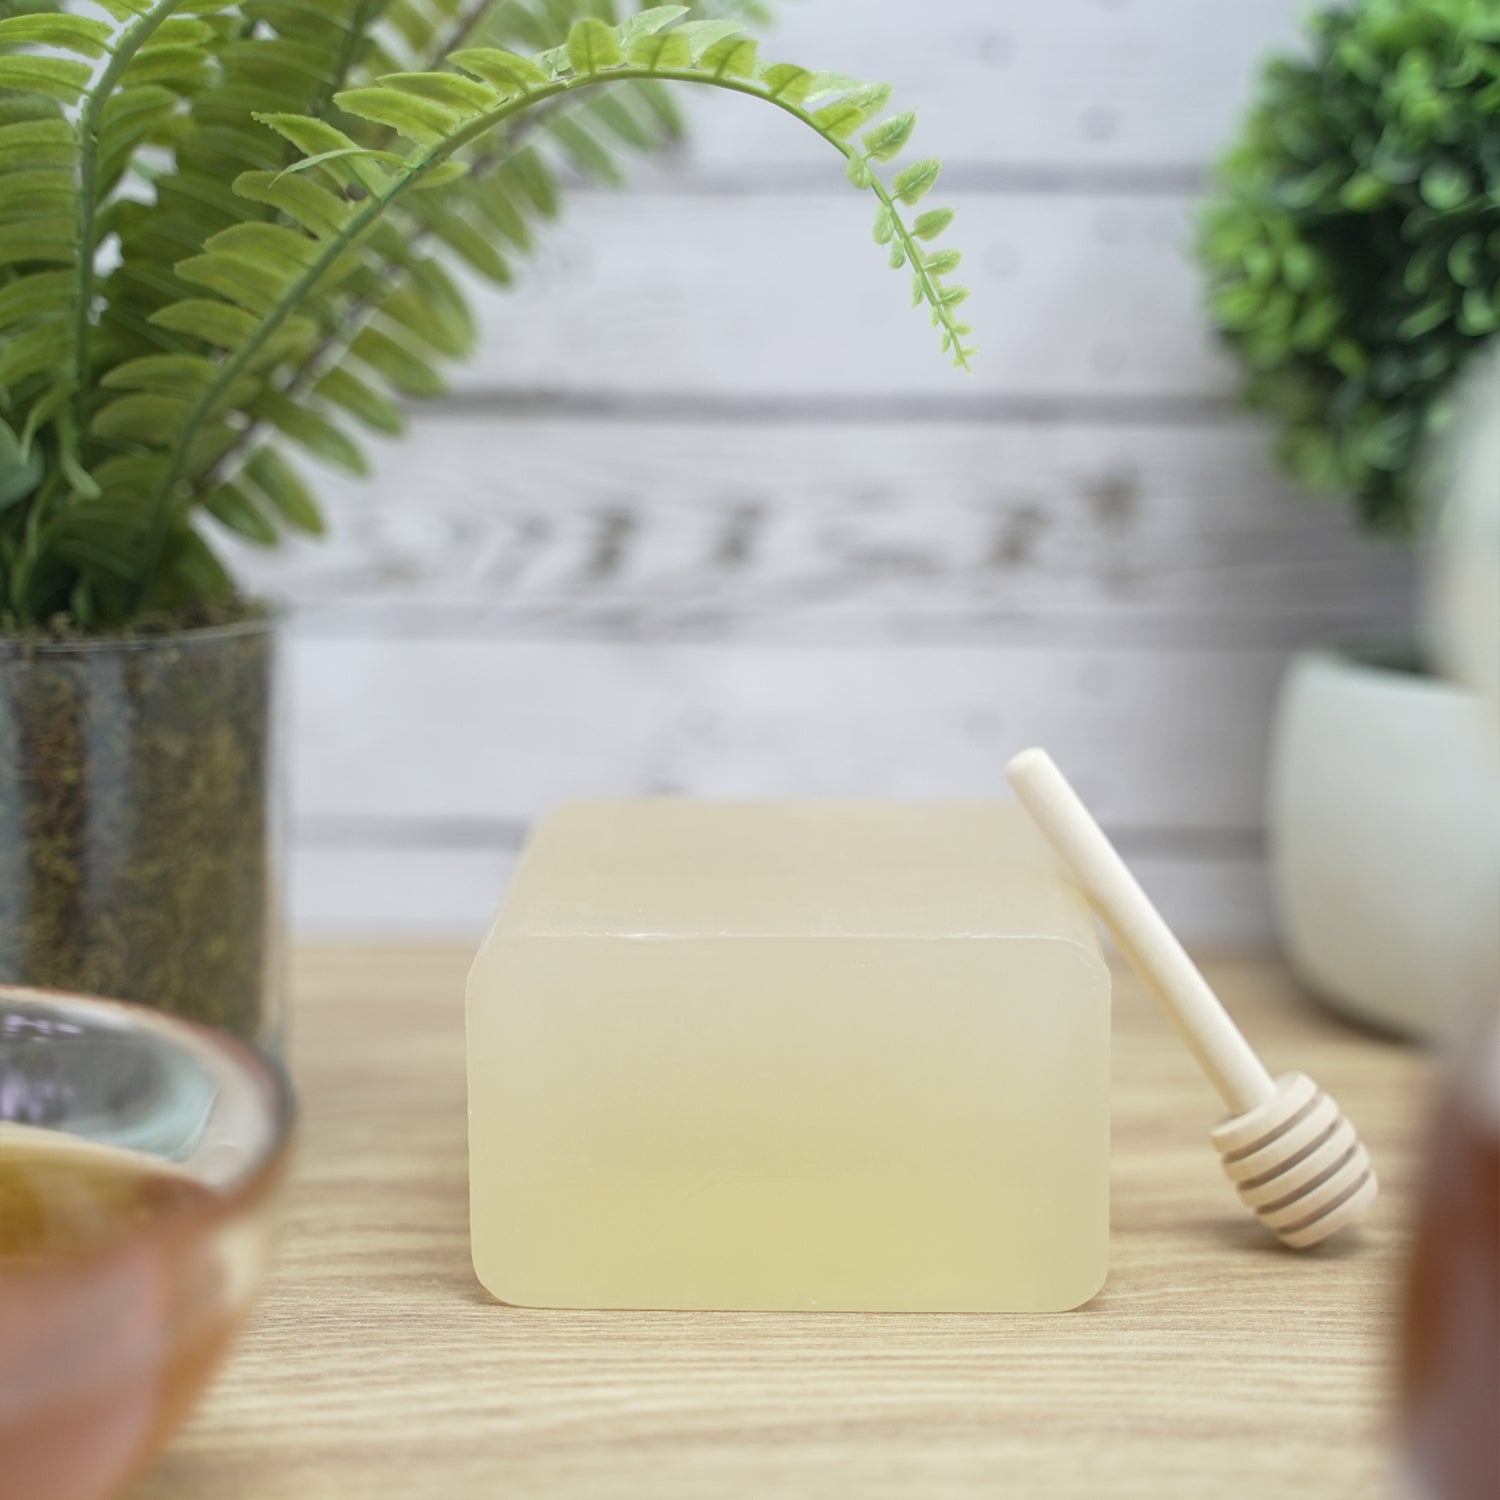 Premium Honey Clear Soap Base Melt & Pour Natural Organic Soap Base for  Soap Making - SLS /